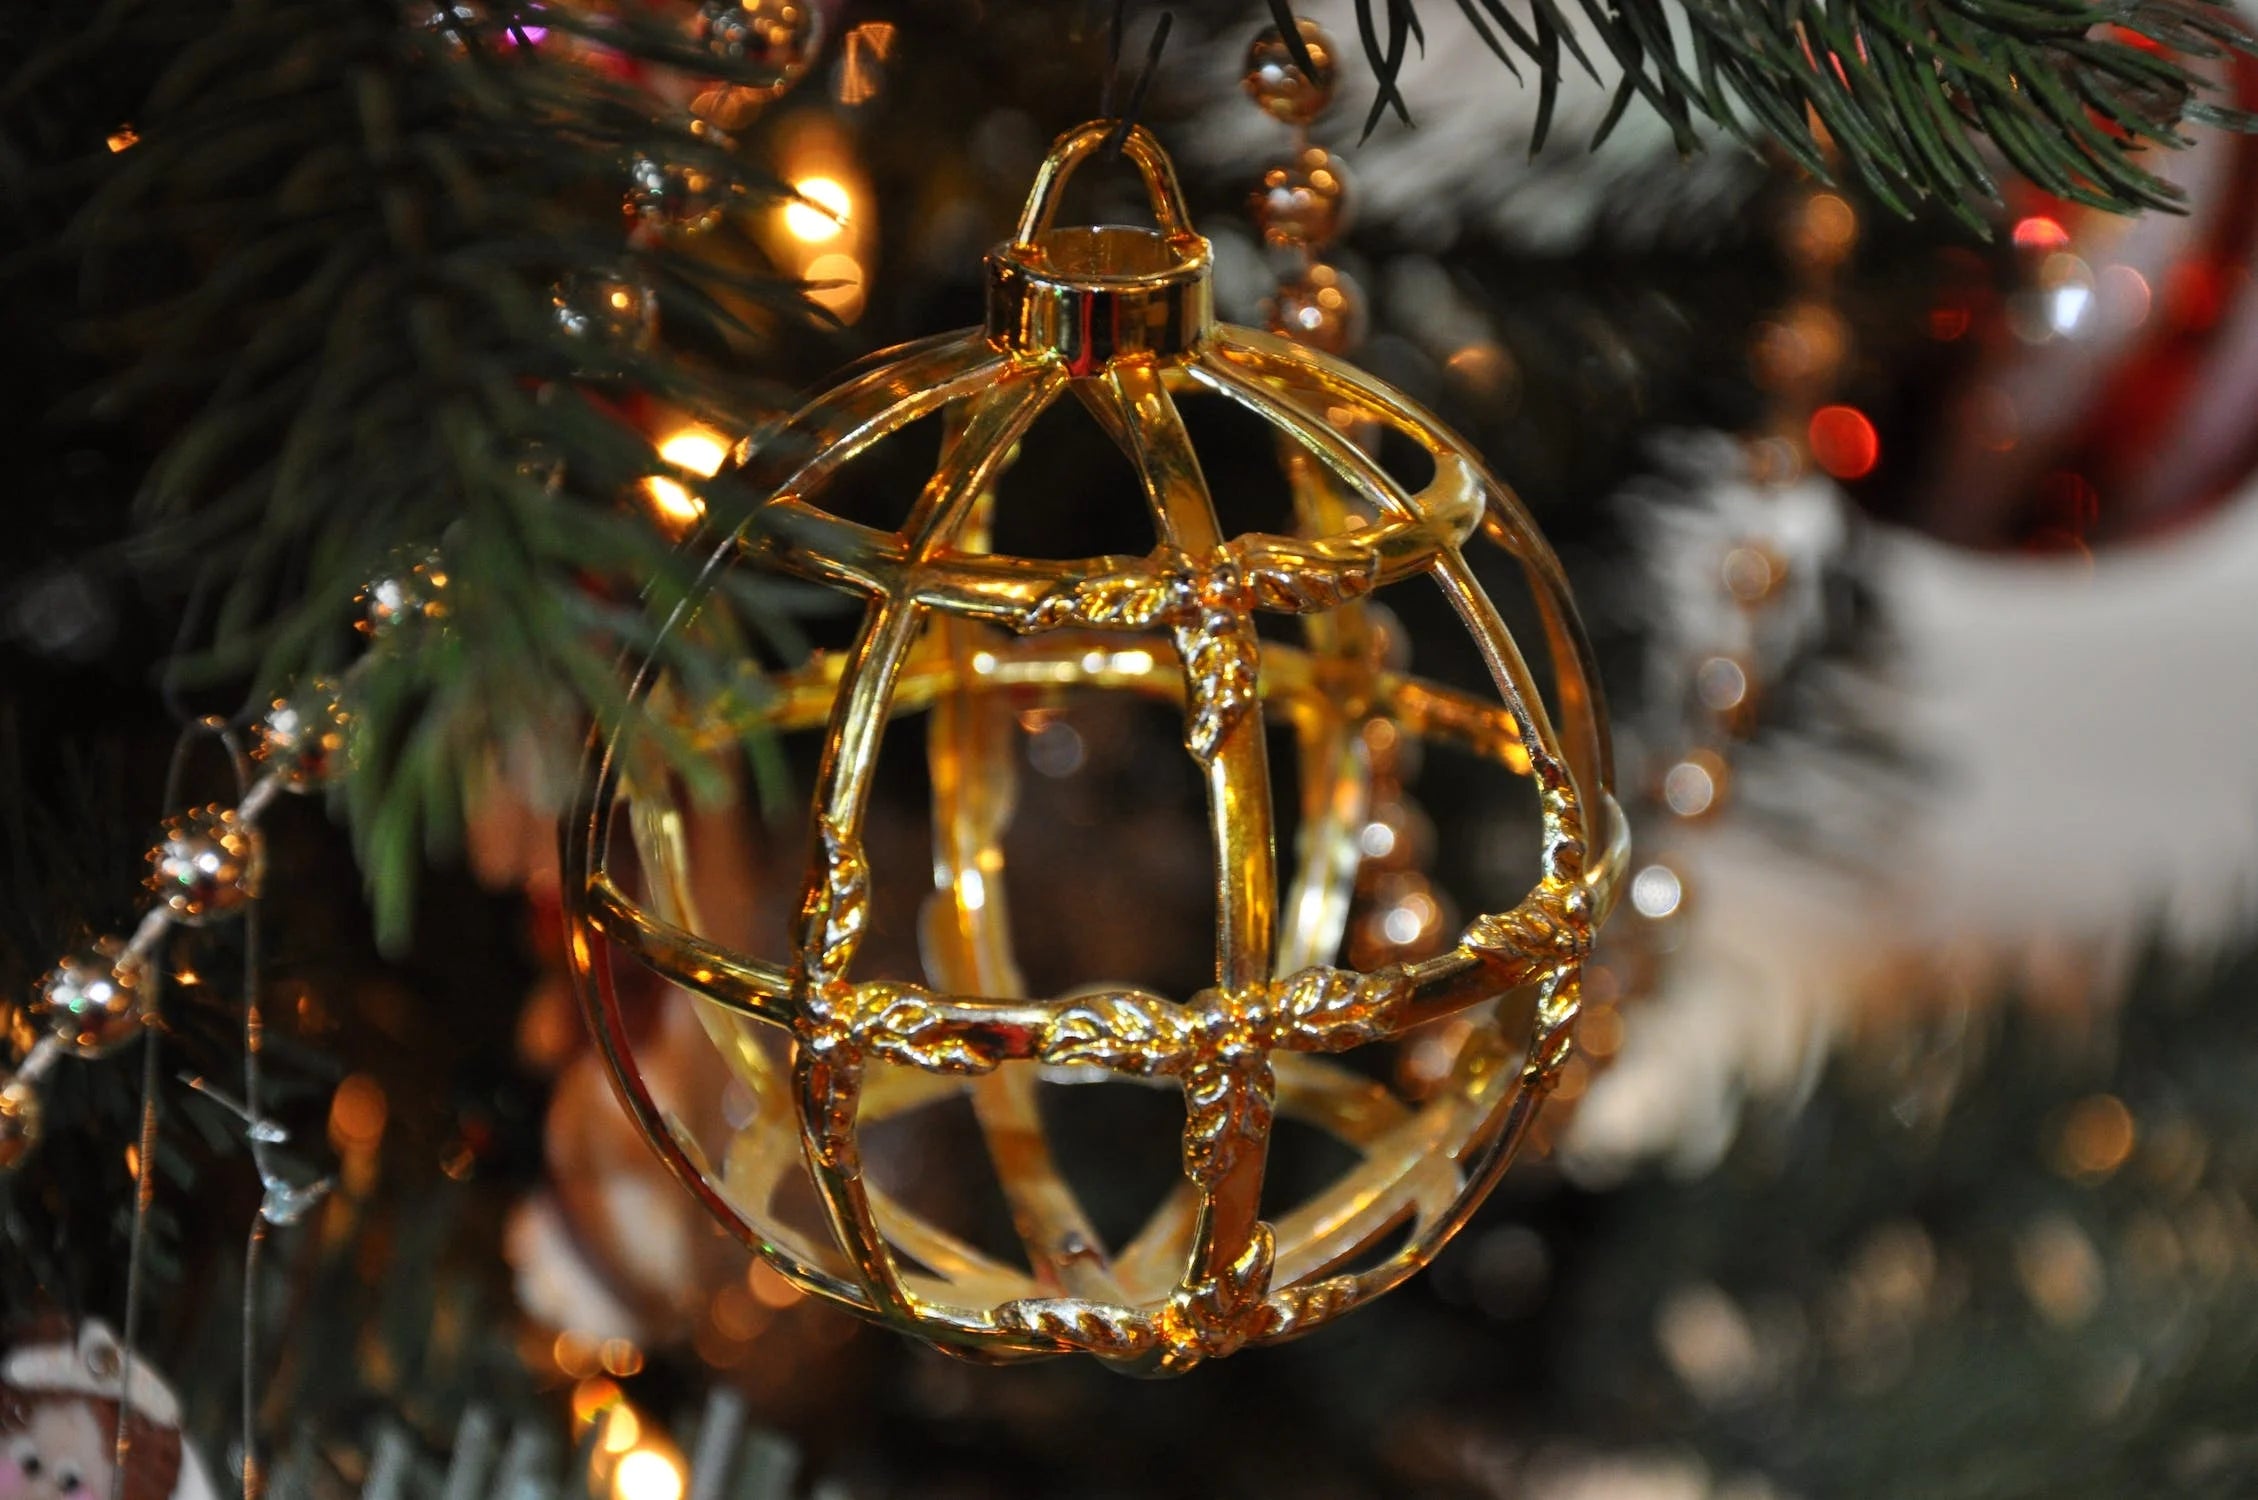 Christmas Decoration on Tree